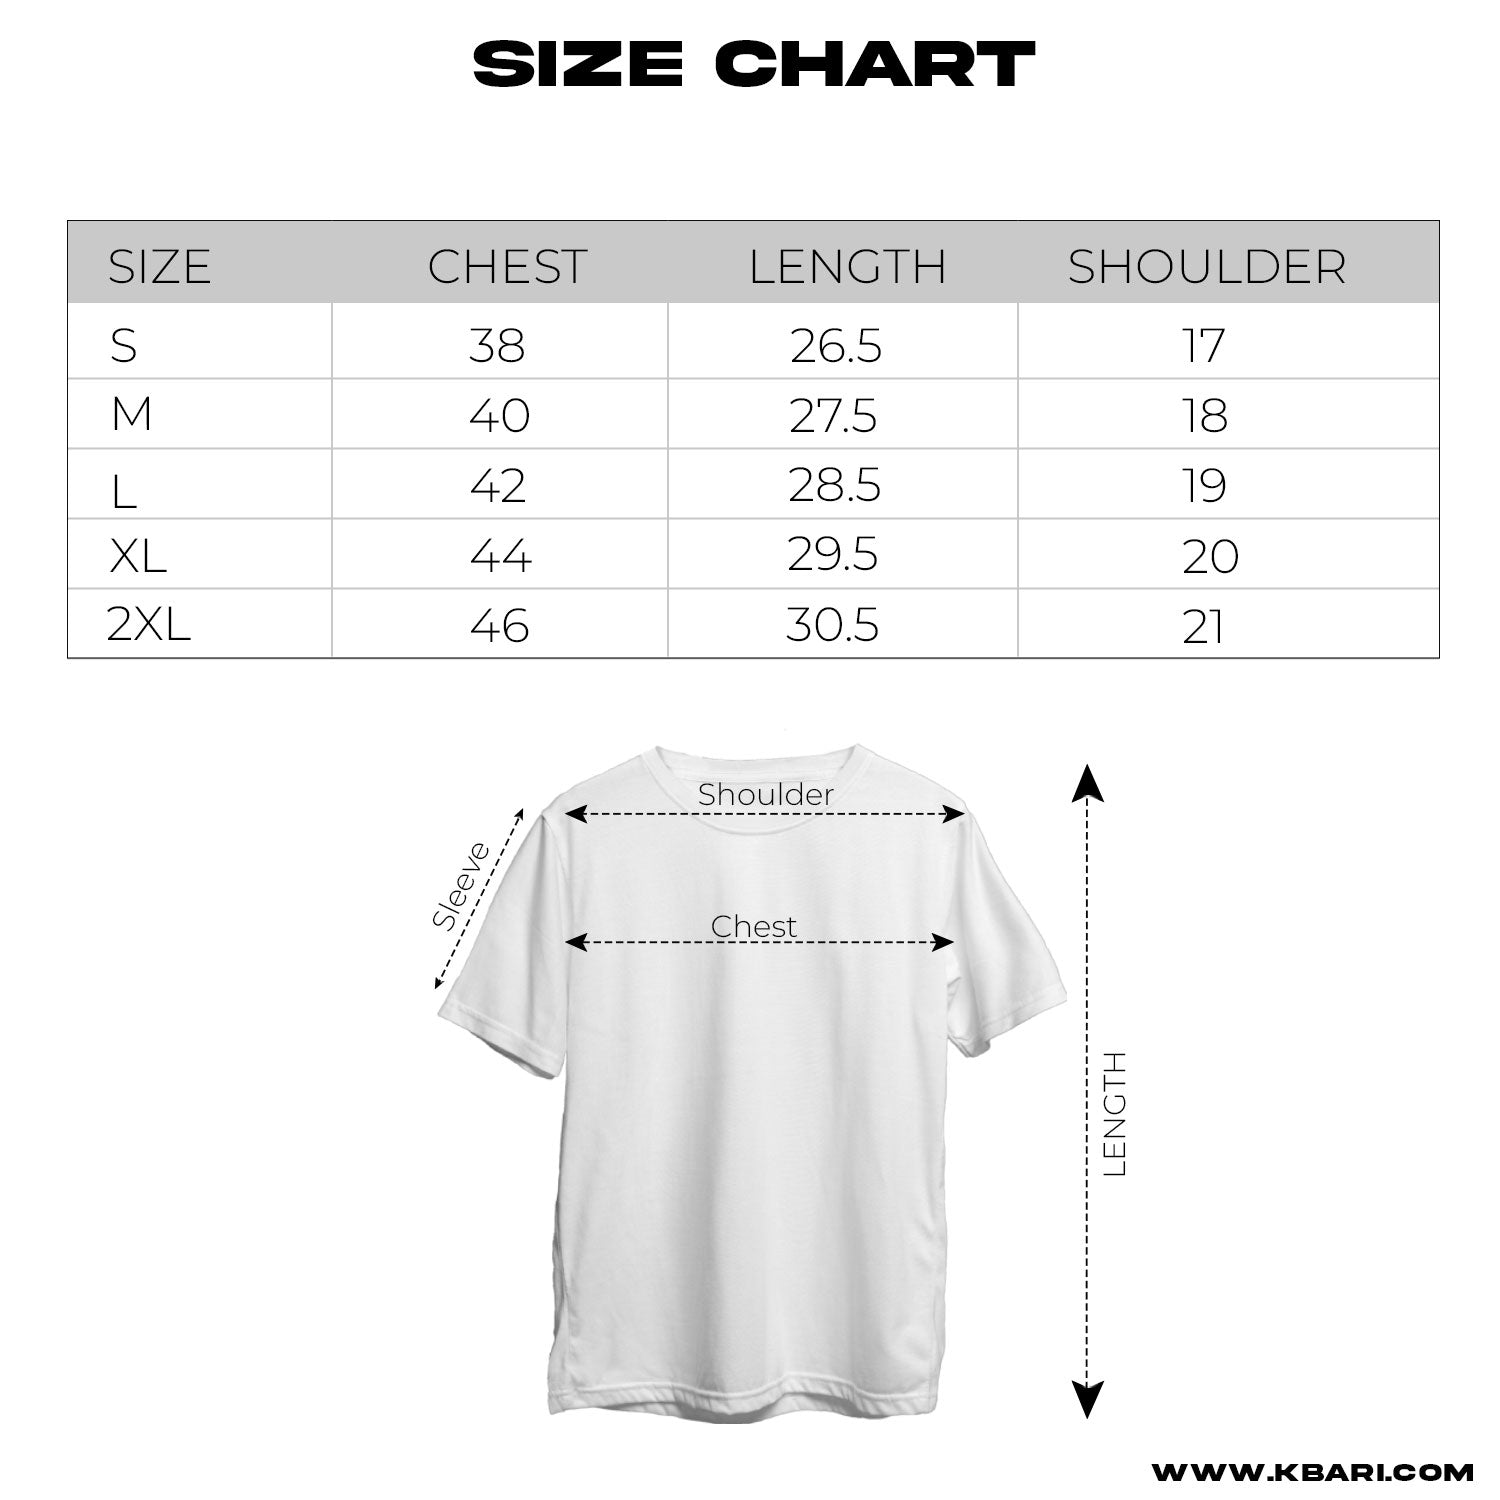 Demise Front & back Graphic Printed Regular T-Shirt